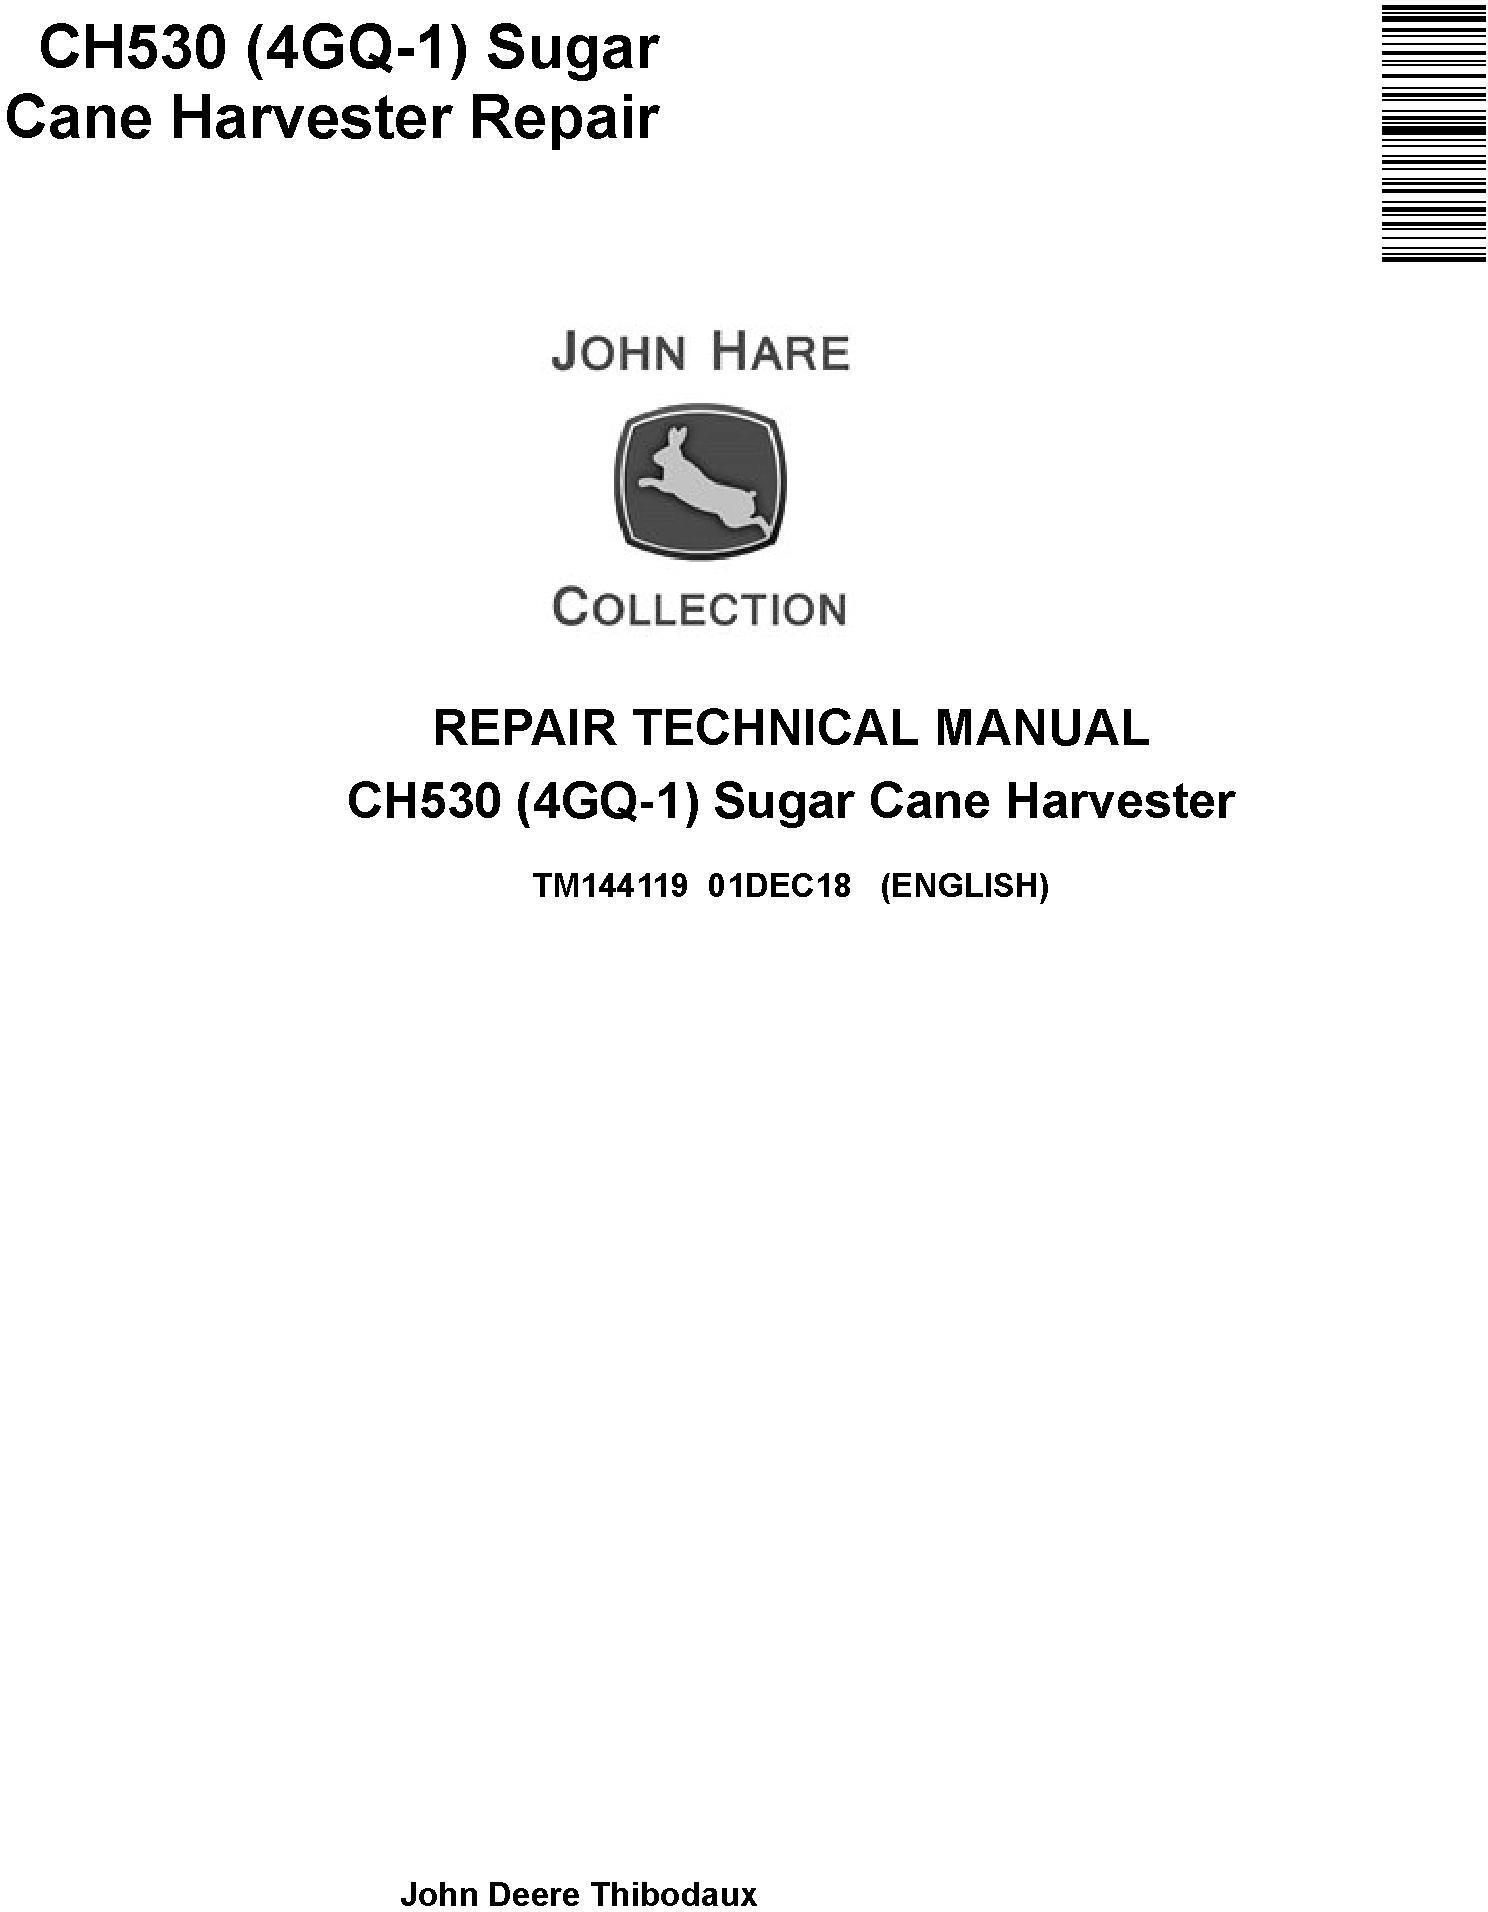 John Deere CH530 4GQ-1 Sugar Cane Harvester Technical Manual TM144119